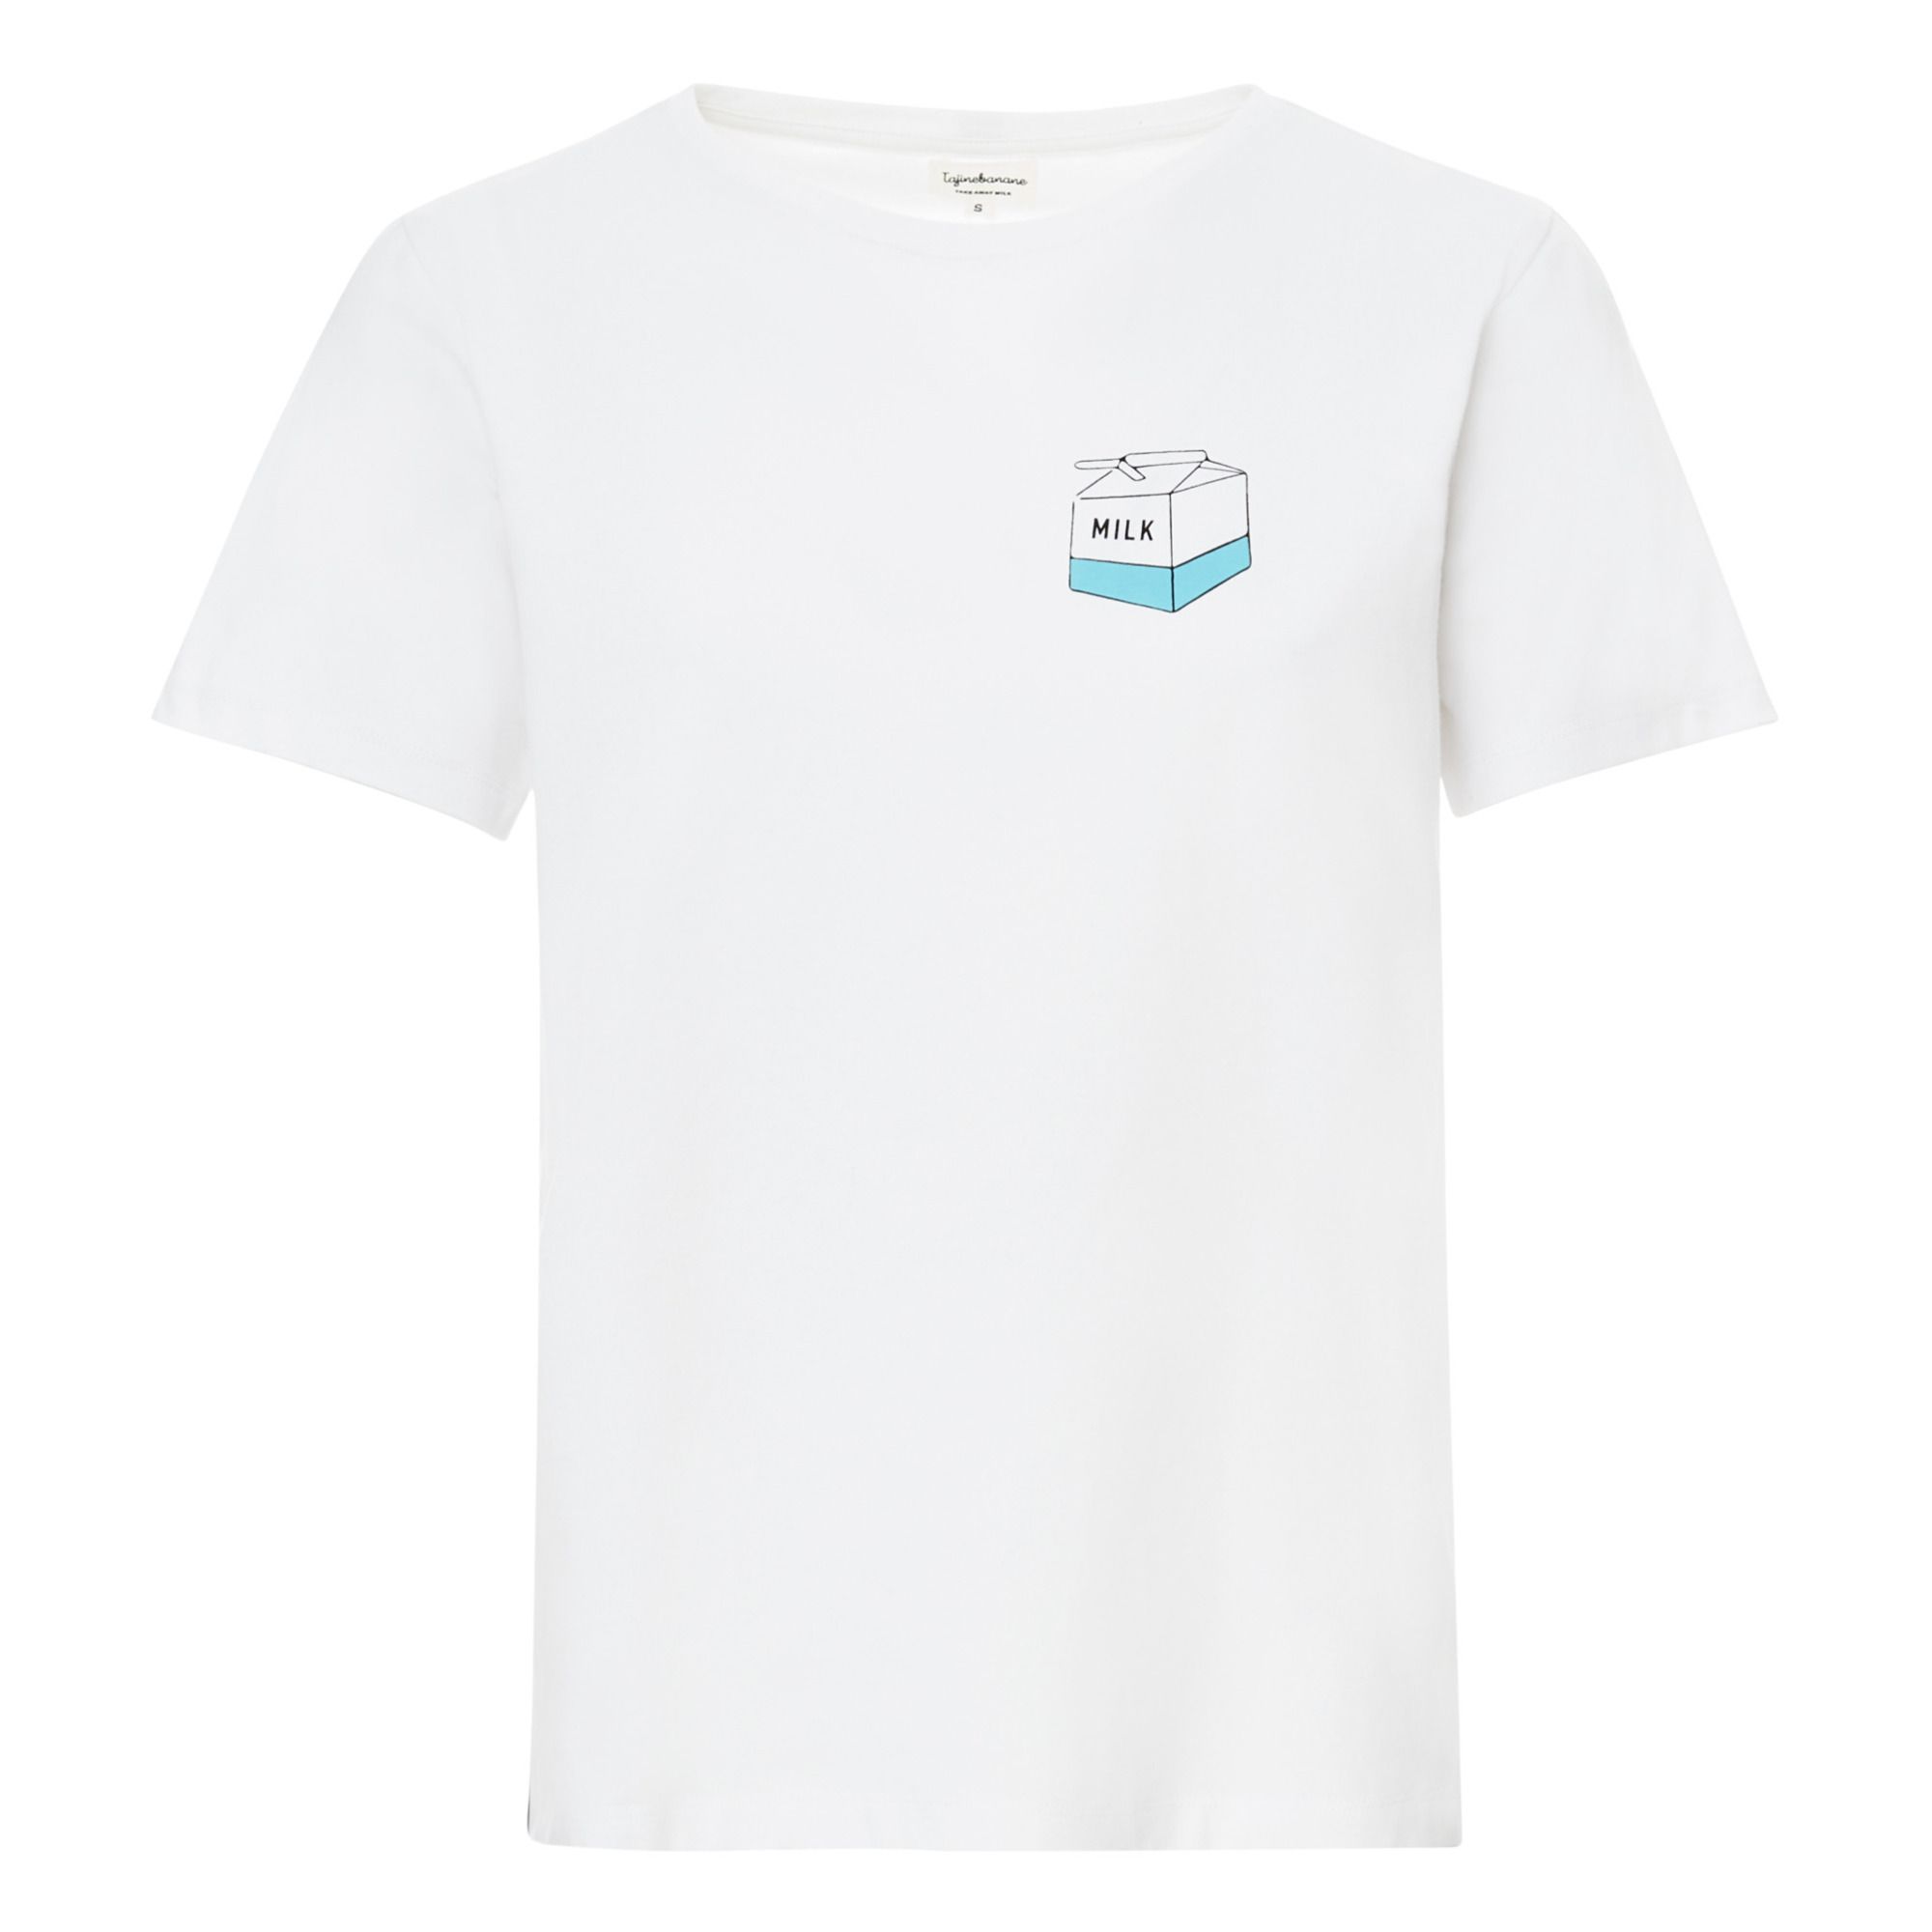 Tajinebanane - T-Shirt d'allaitement Take away milk - Femme - Blanc